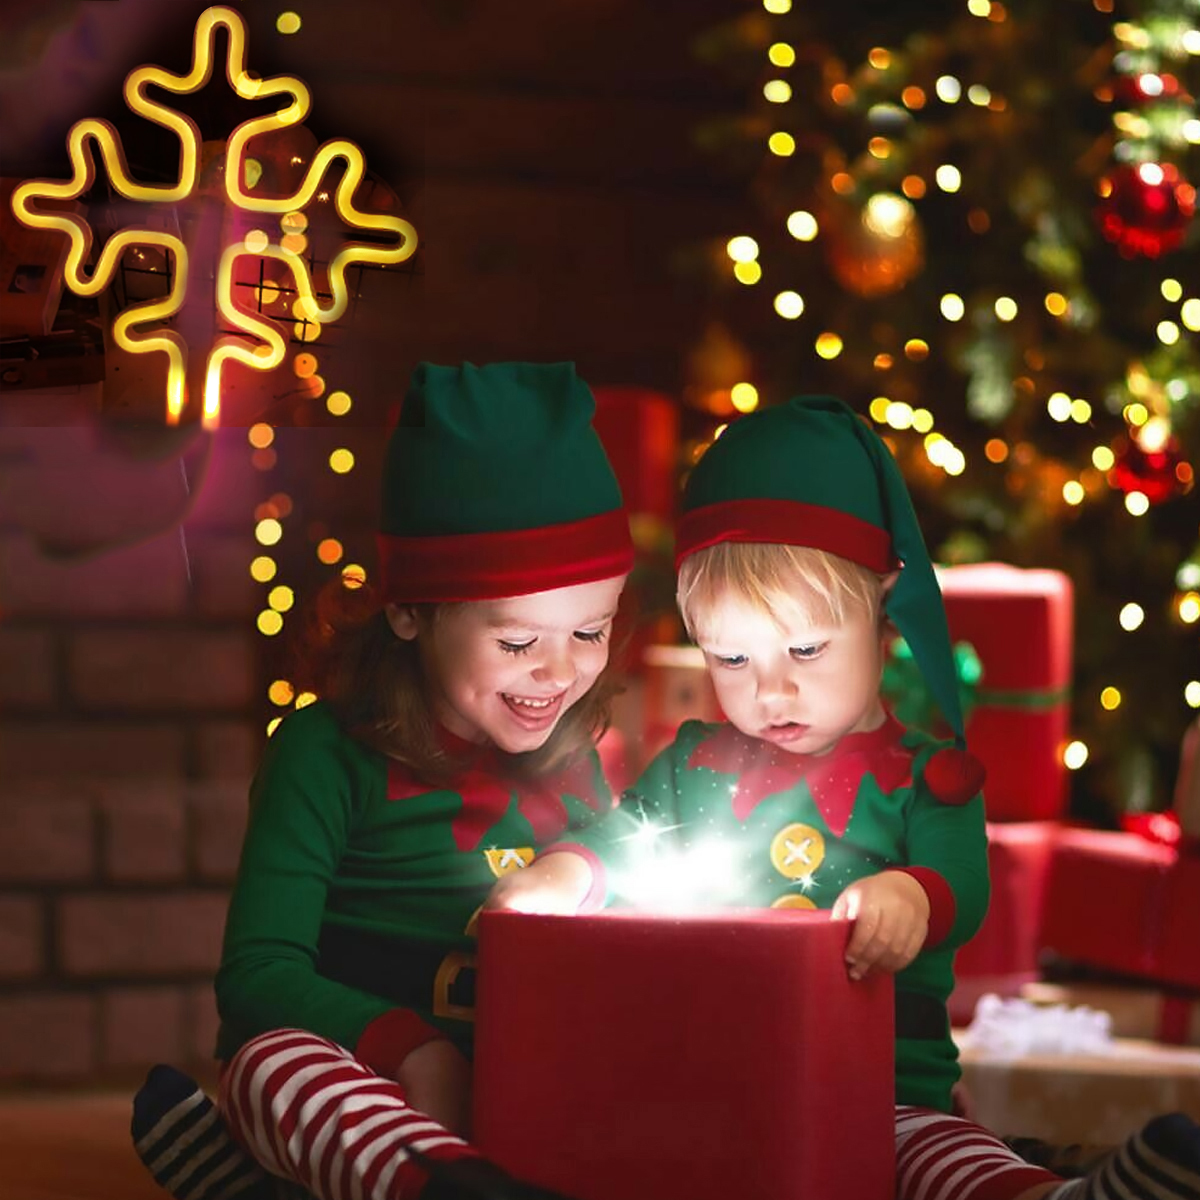 BatteryUSB-Neon-Light-Sign-LED-Lamp-Shaped-Night-Light-Art-Wall-Warm-Party-Christmas-Decoration-1800988-5